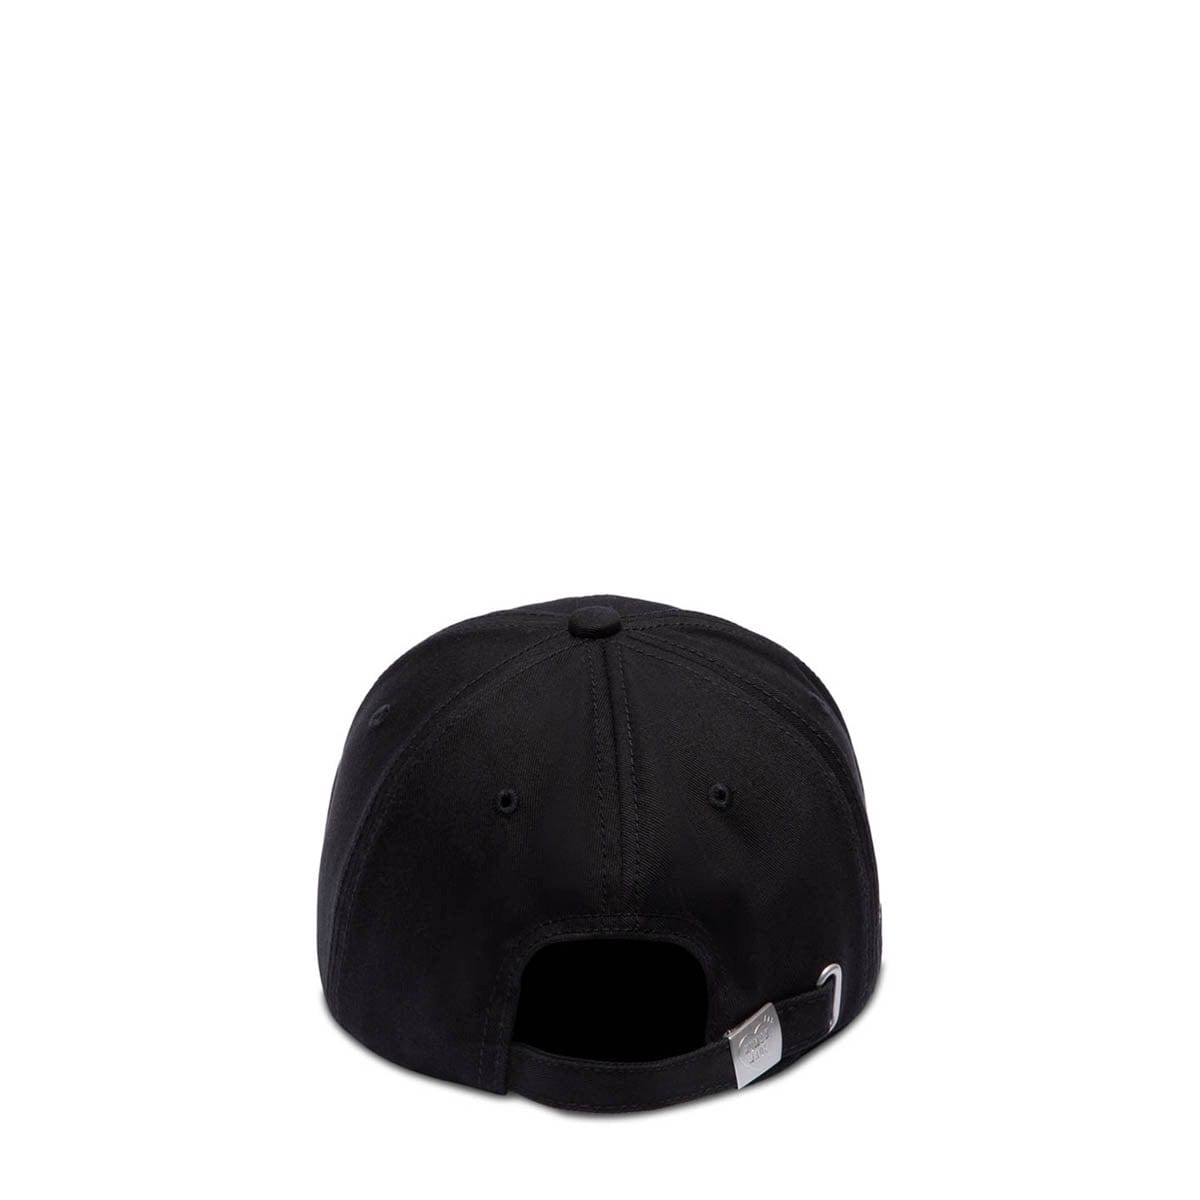 Human Made Headwear BLACK / O/S 6 PANEL TWILL CAP #1